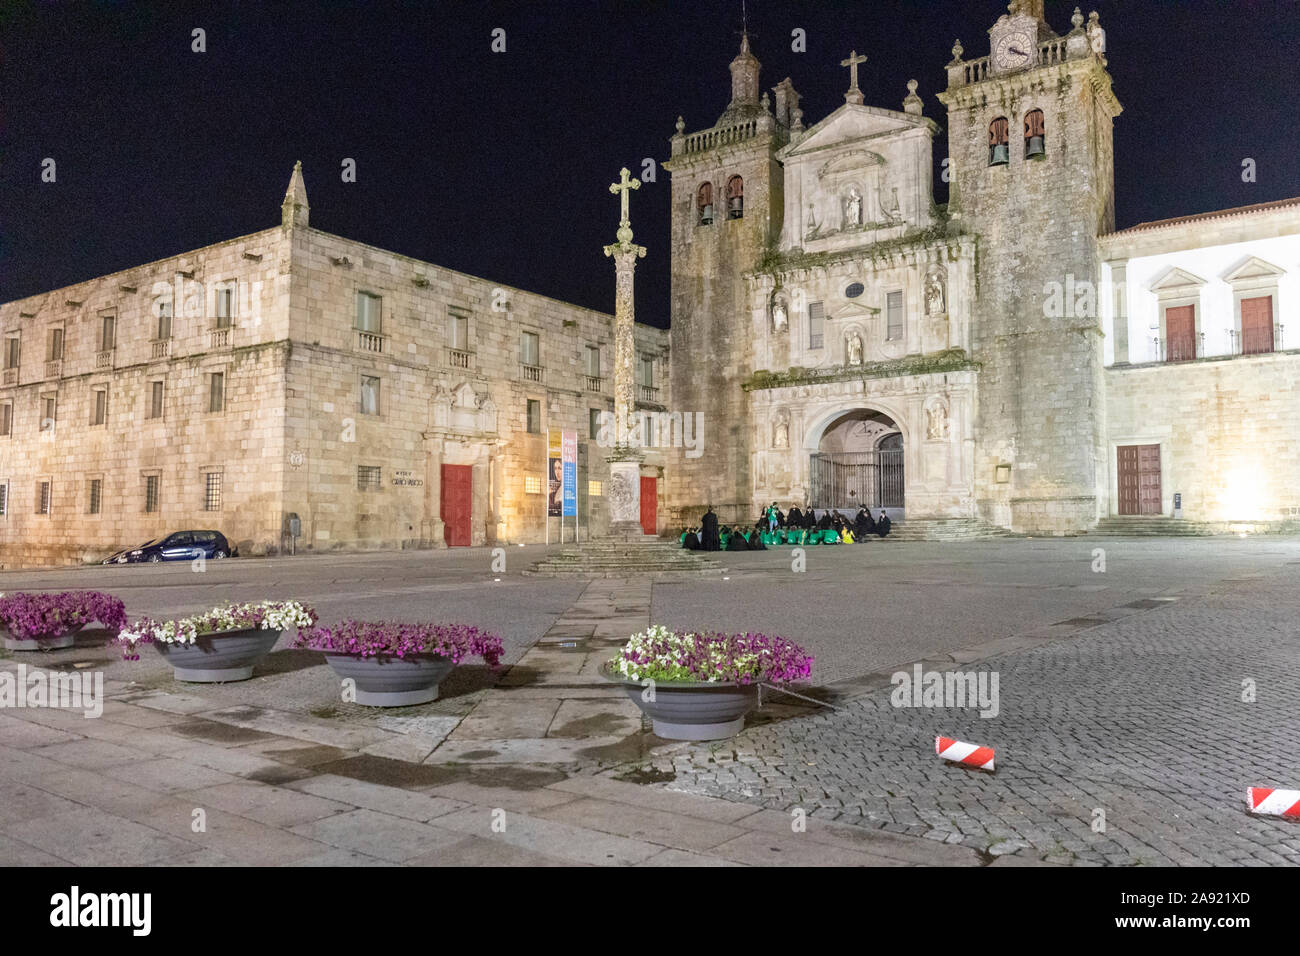 Se Caerdral de Viseu Cathedral Square, Viseu, Portugal illuminated at night Stock Photo